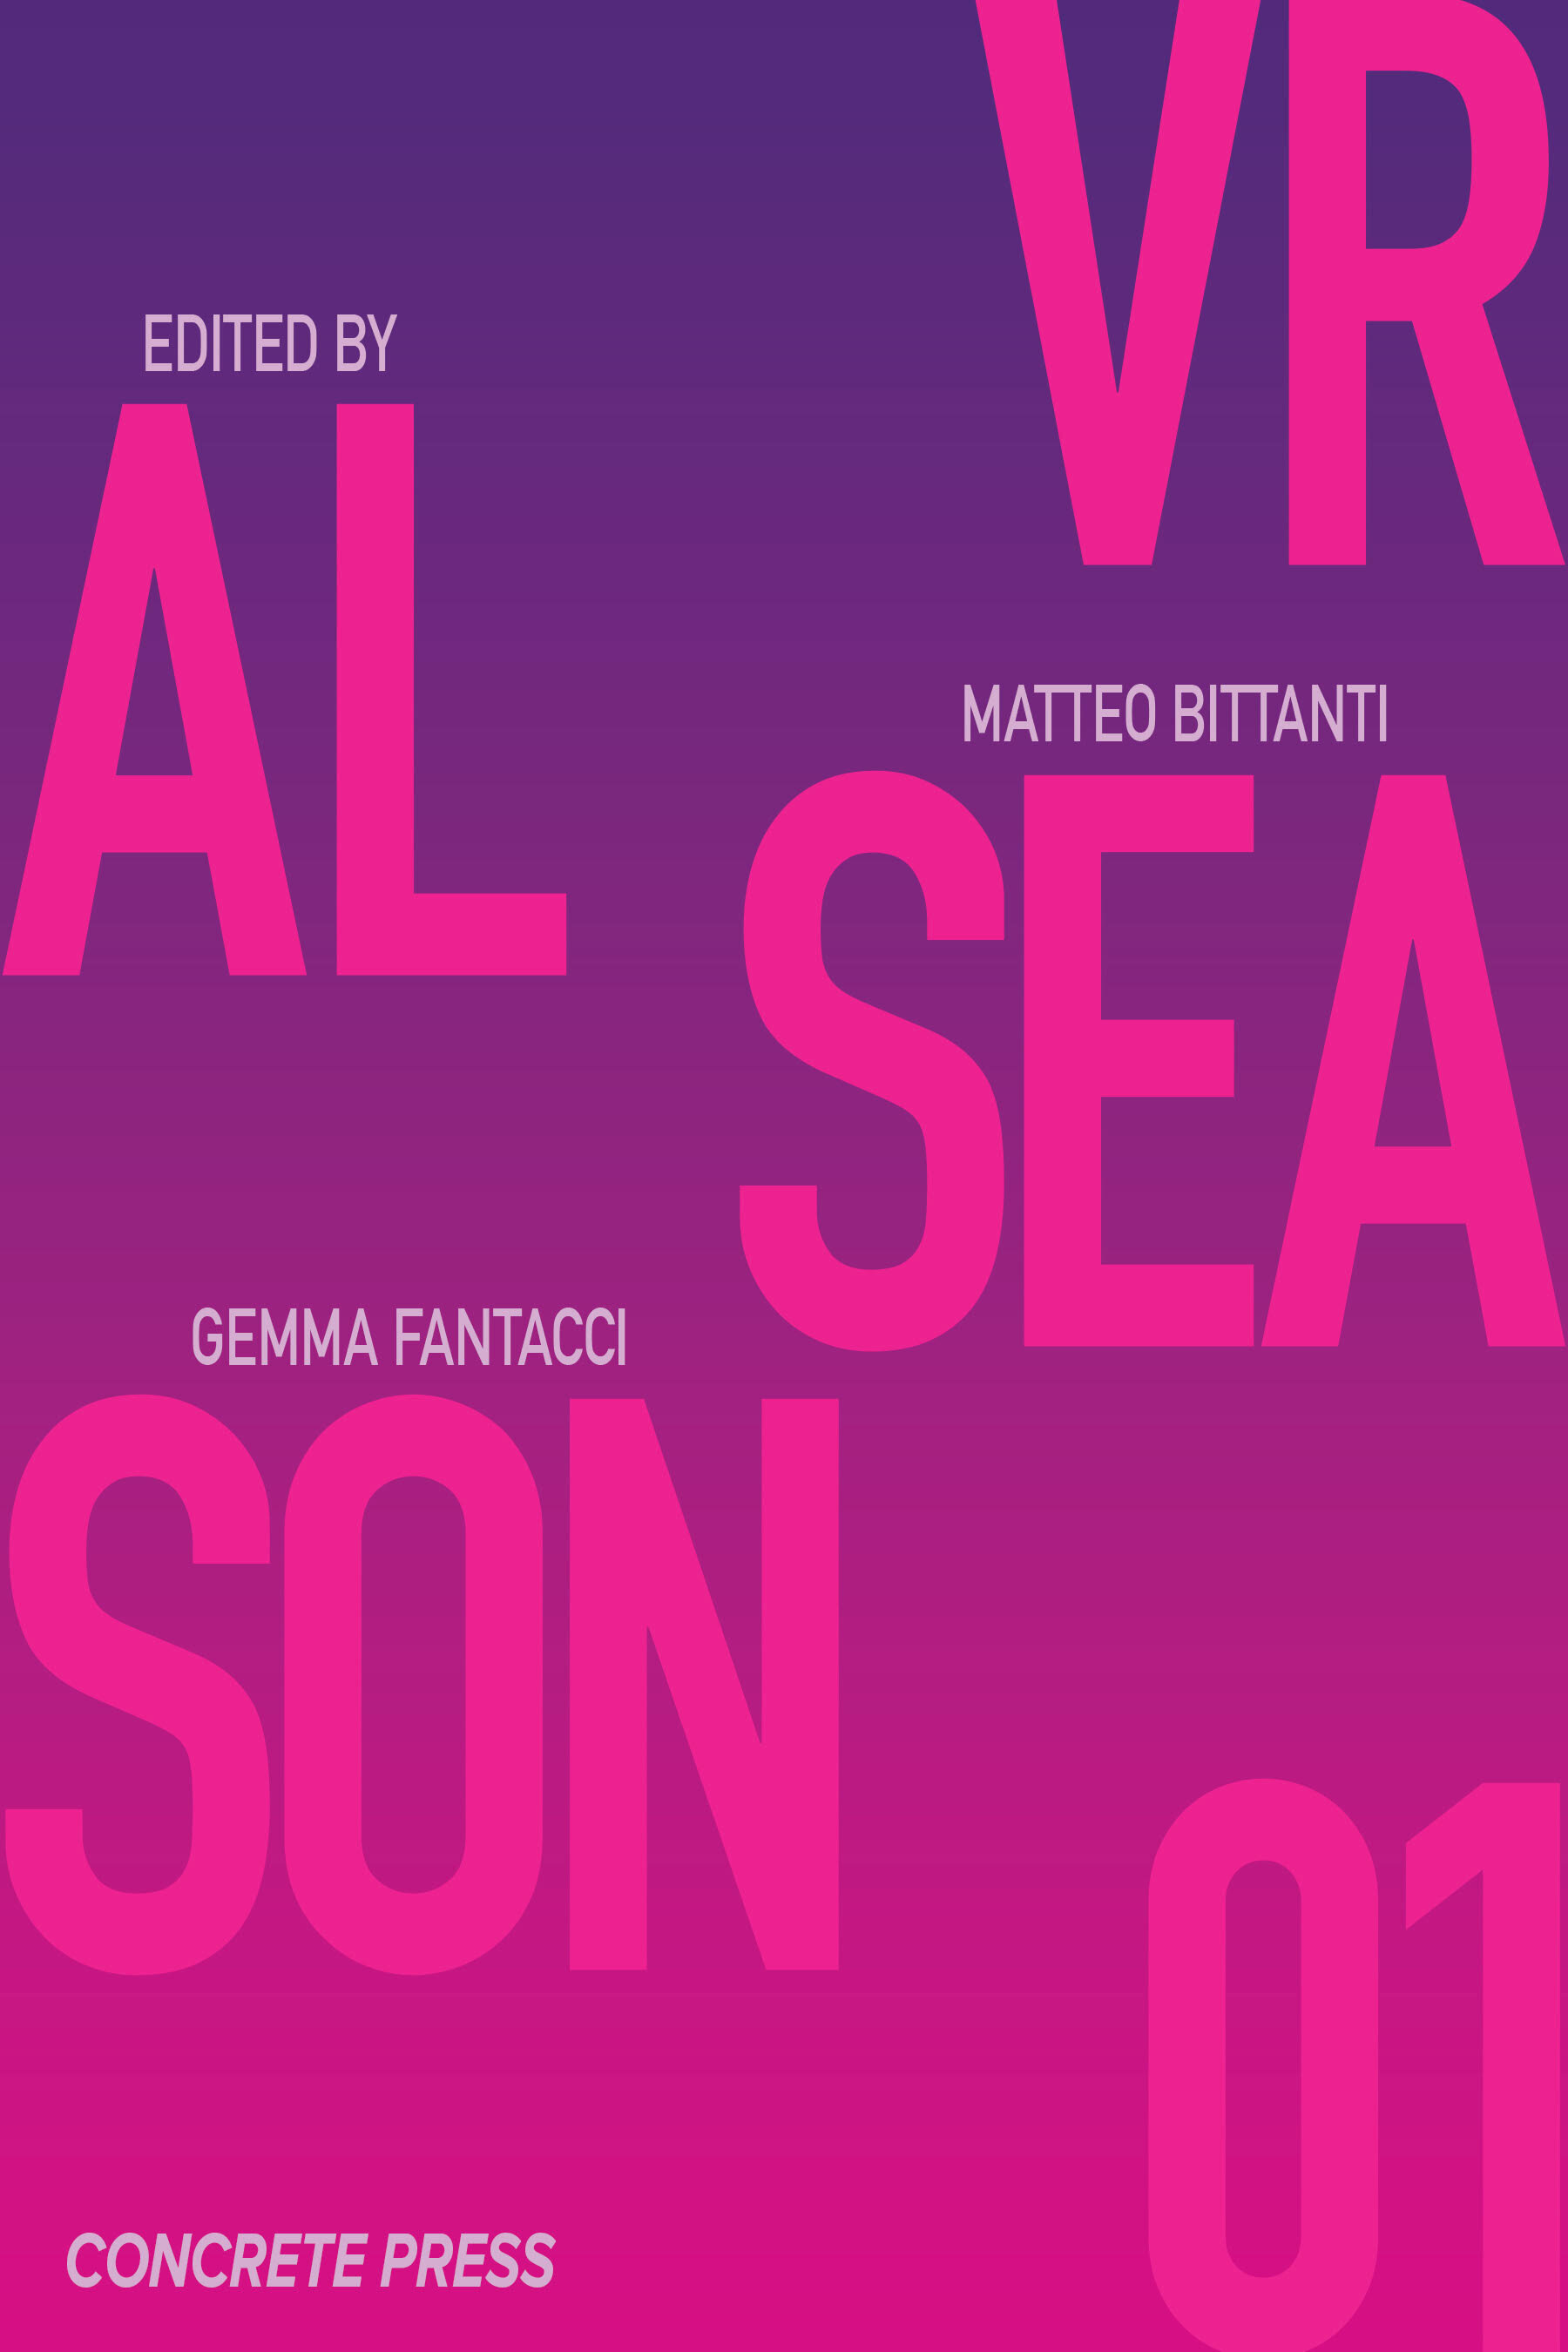 Matteo Bittanti and Gemma Fantacci (Eds.) 2021 [AVAILABLE] (Copy)